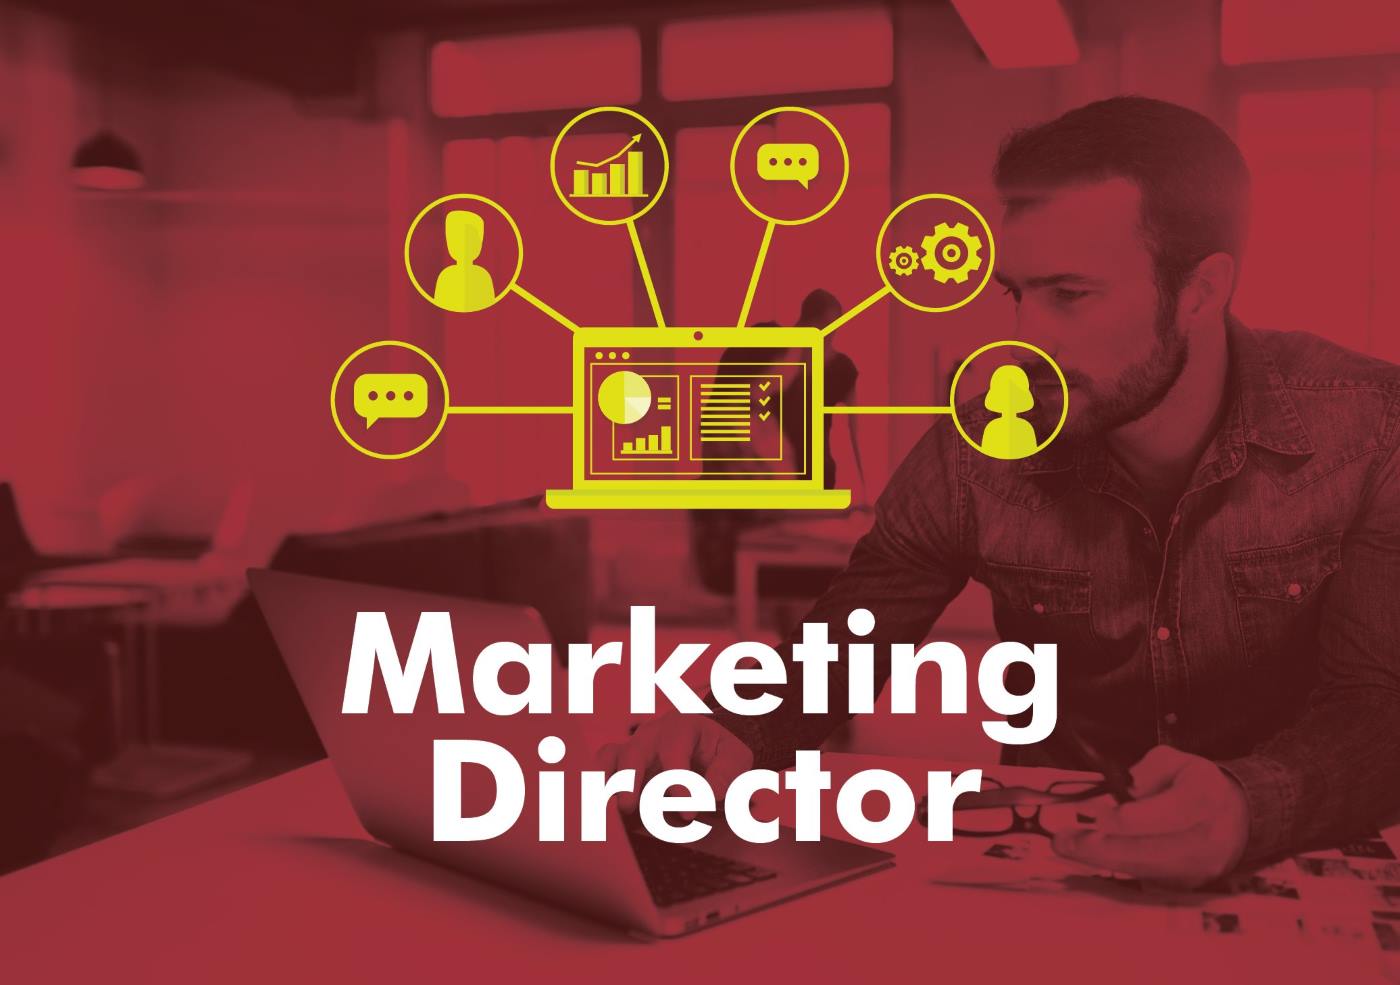 Marketing Director - Cầu nối giữa bộ phận bộ phận Finance & Marketing